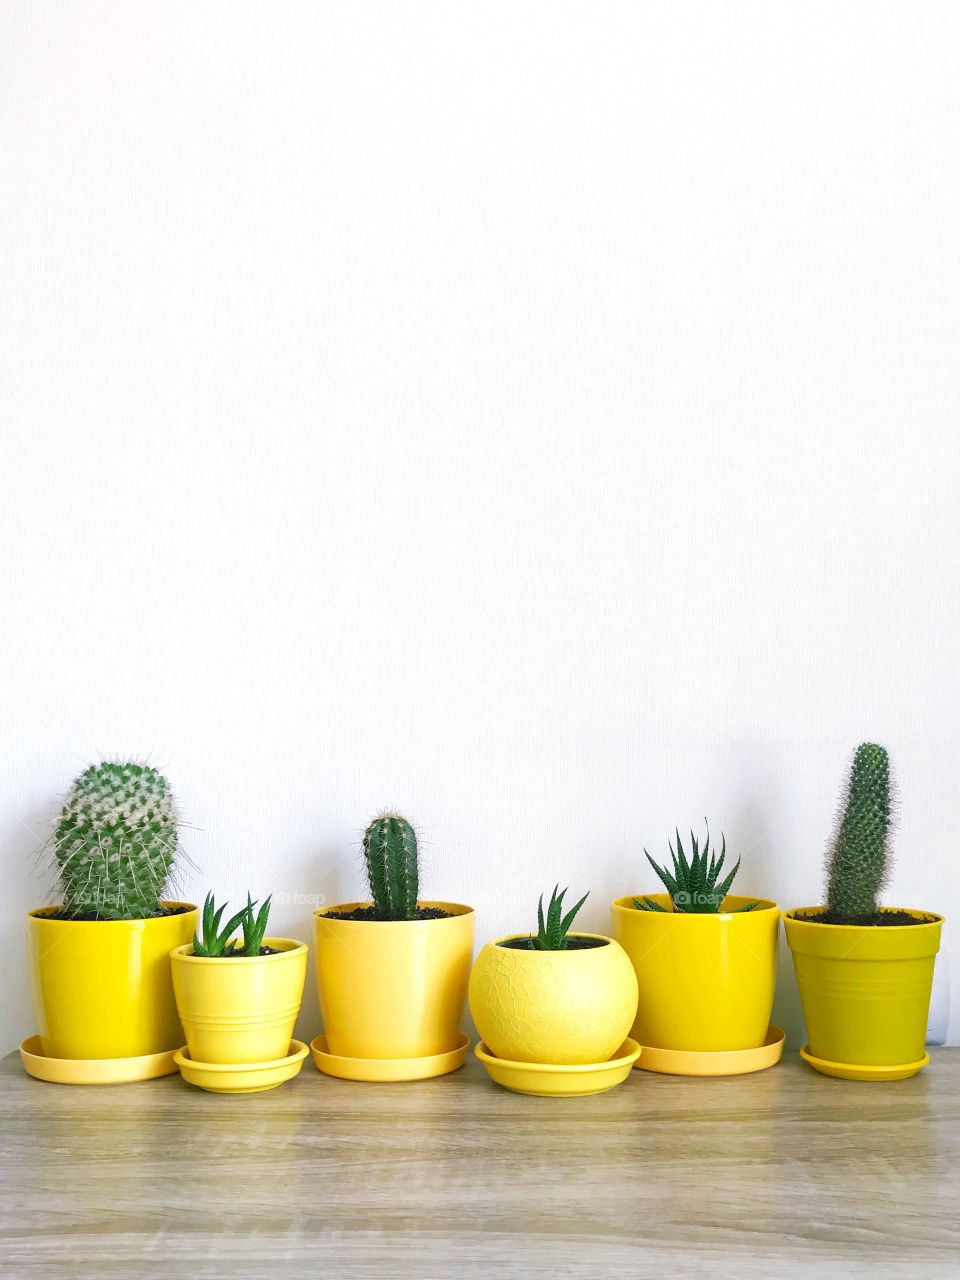 Cute cacti in yellow flowerpots  